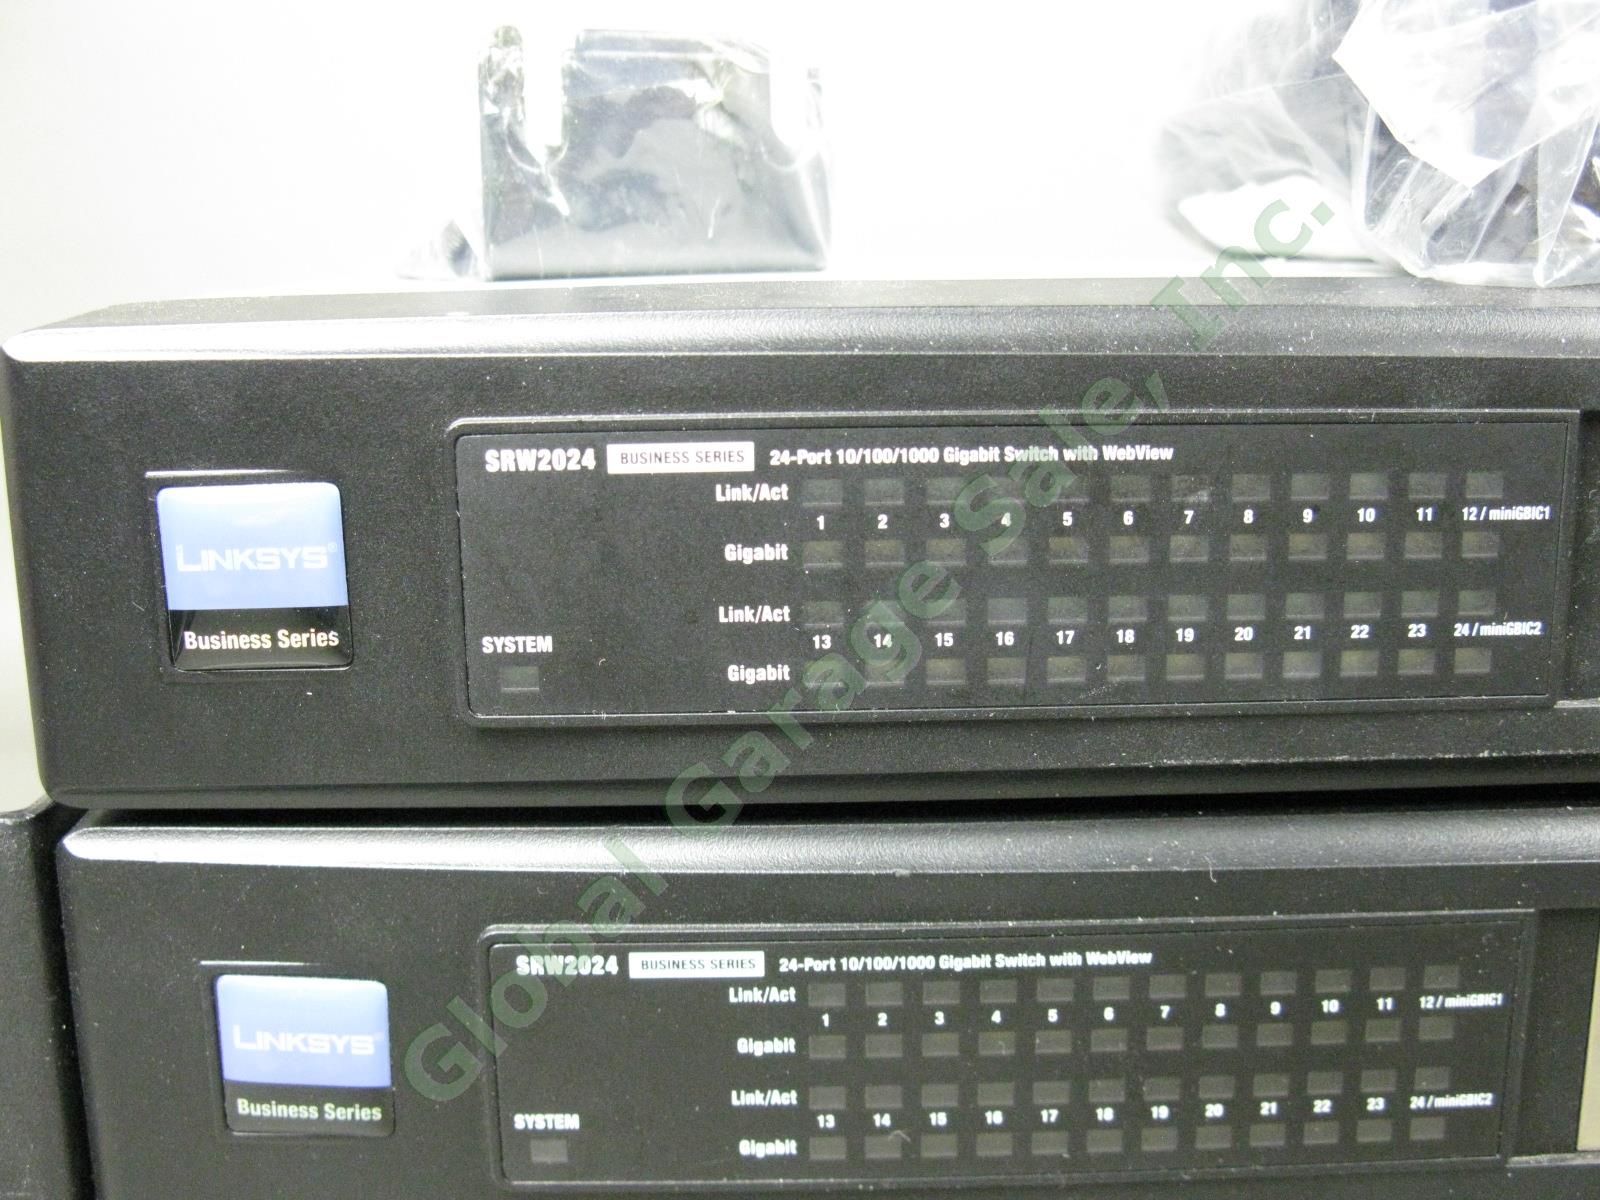 3 Cisco Linksys SRW2024 24-Port 10/100/1000 Gigabit Ethernet Switch Lot Webview 1